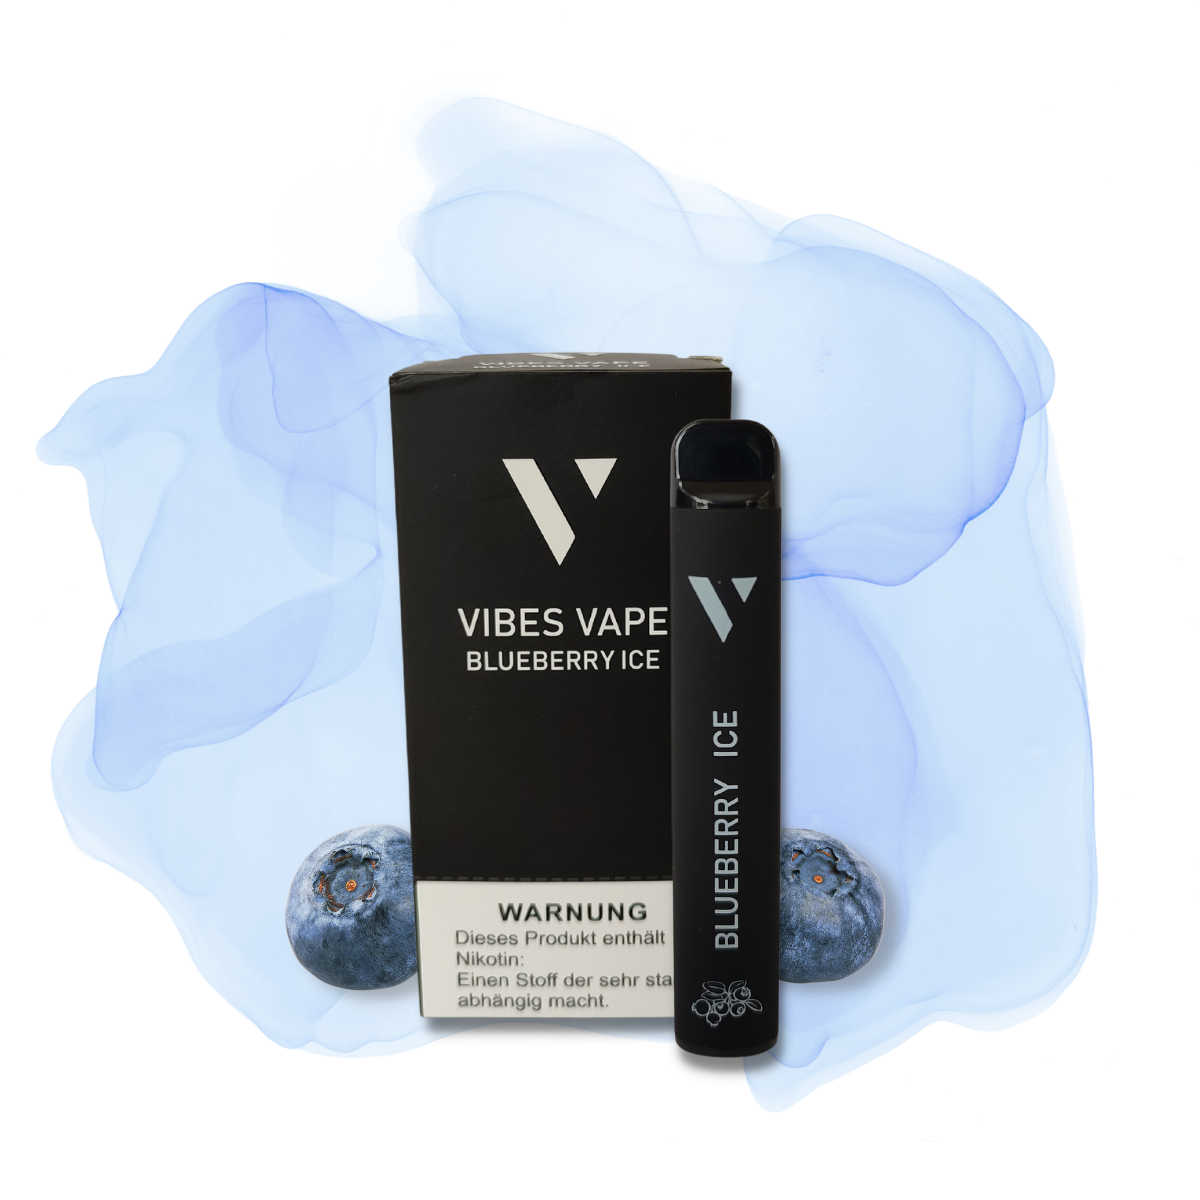 10x Vibes Vape - Blueberry ICE - vibesvape.de